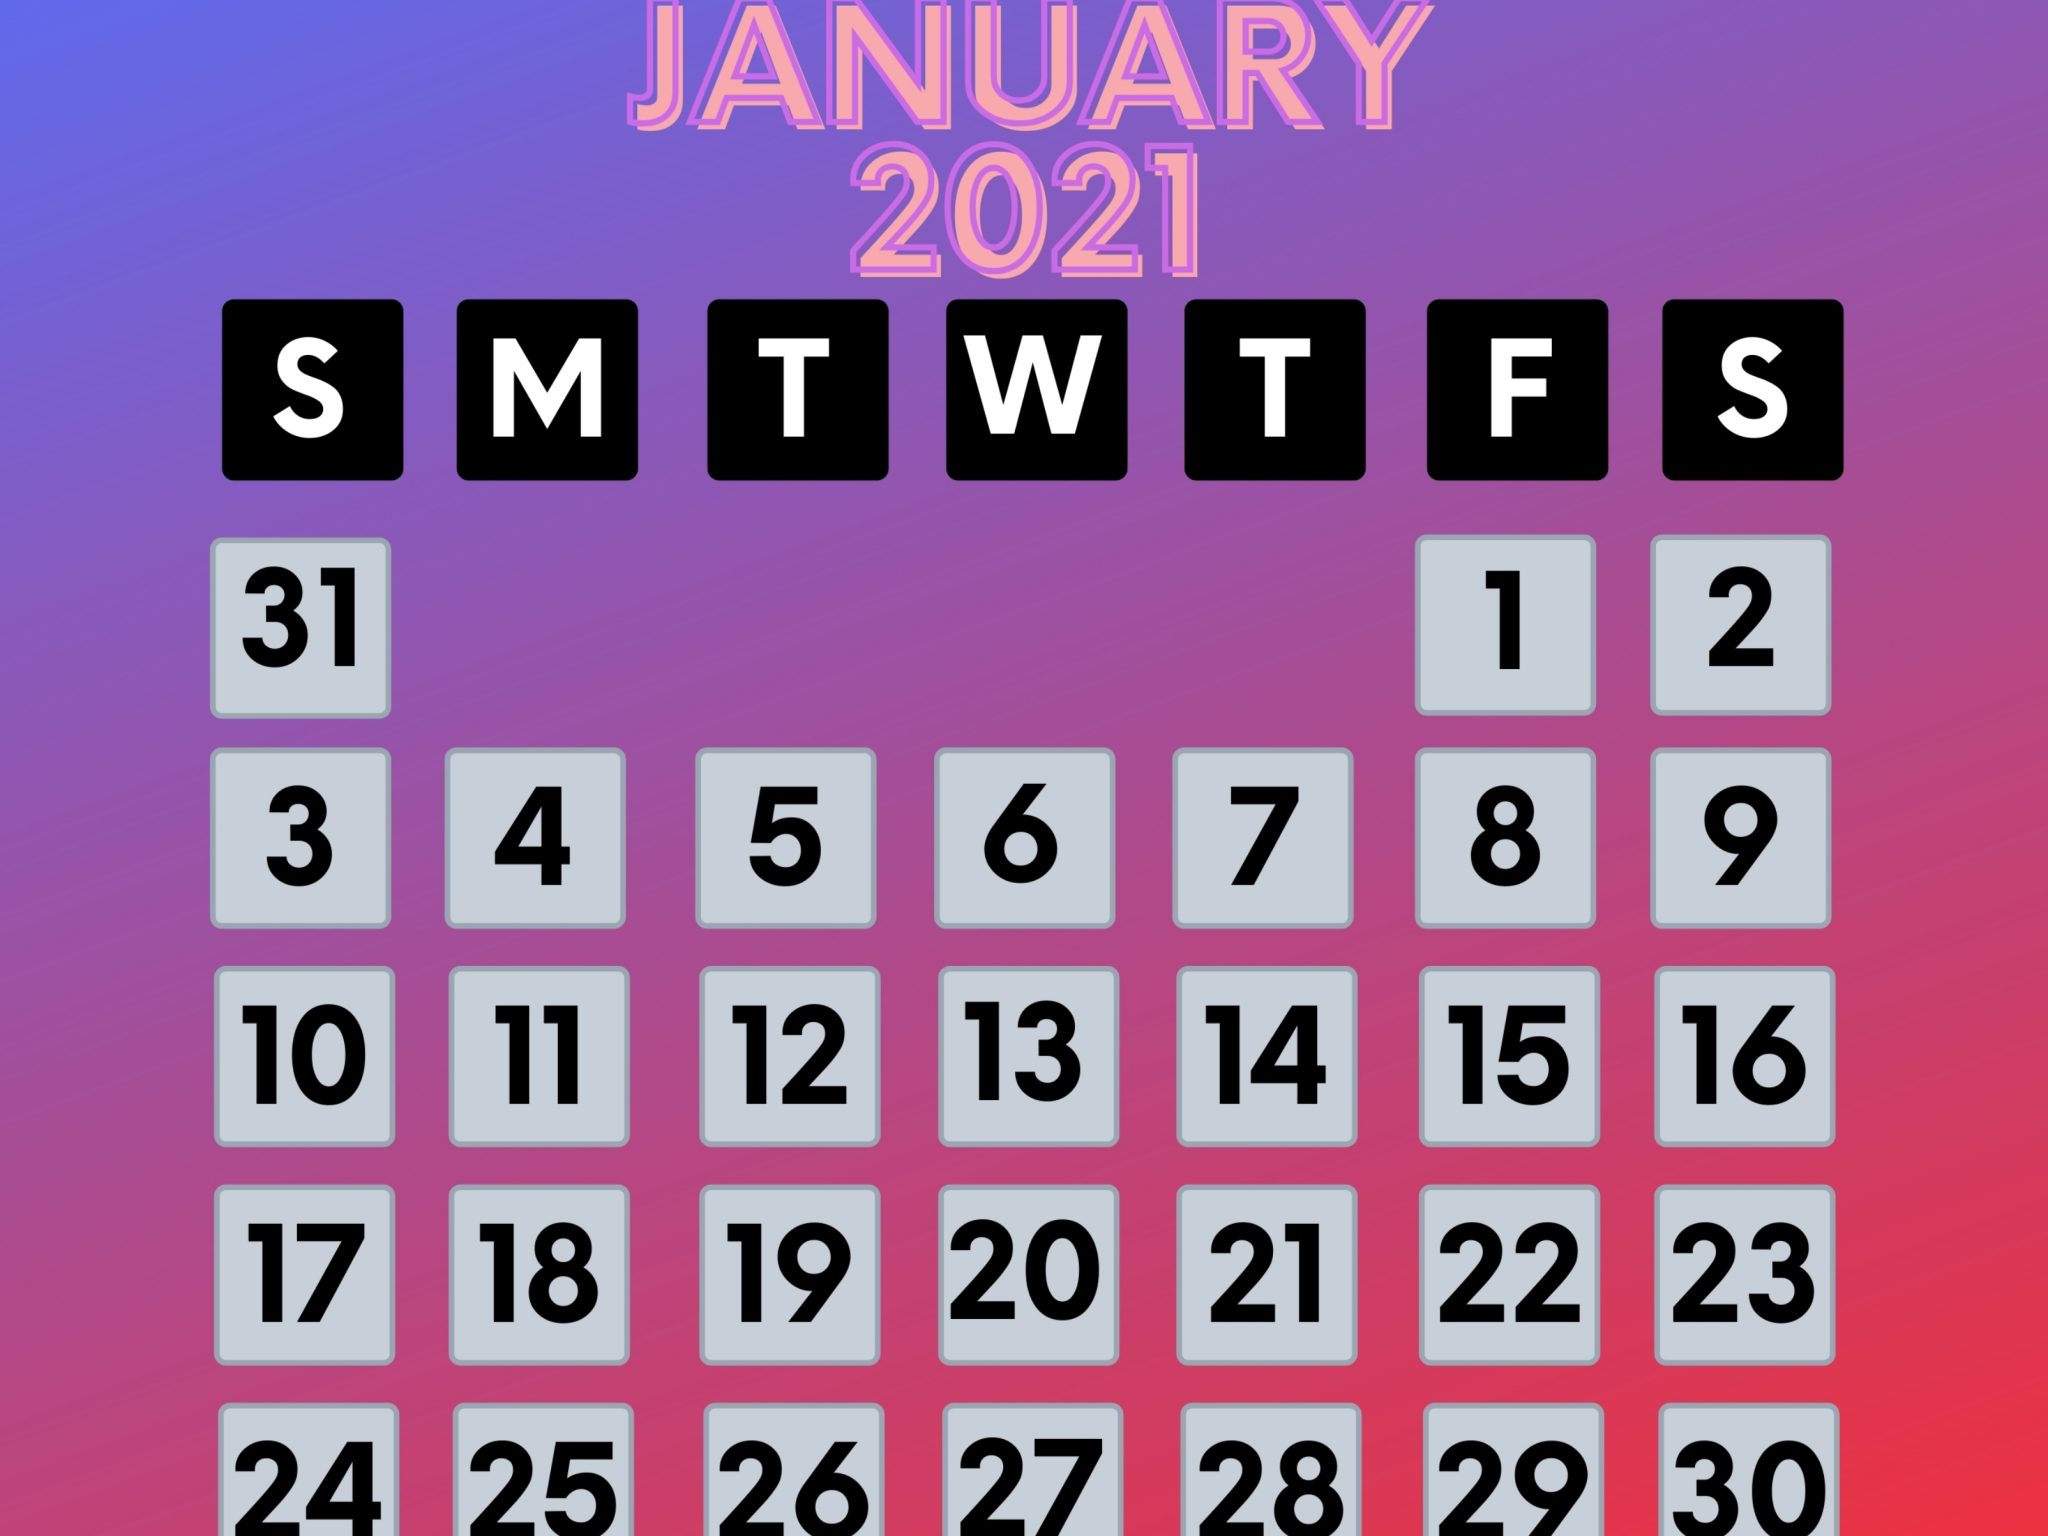 2048x1536 wallpaper January 2021 Calendar iPad Wallpaper 2048x1536 pixels resolution